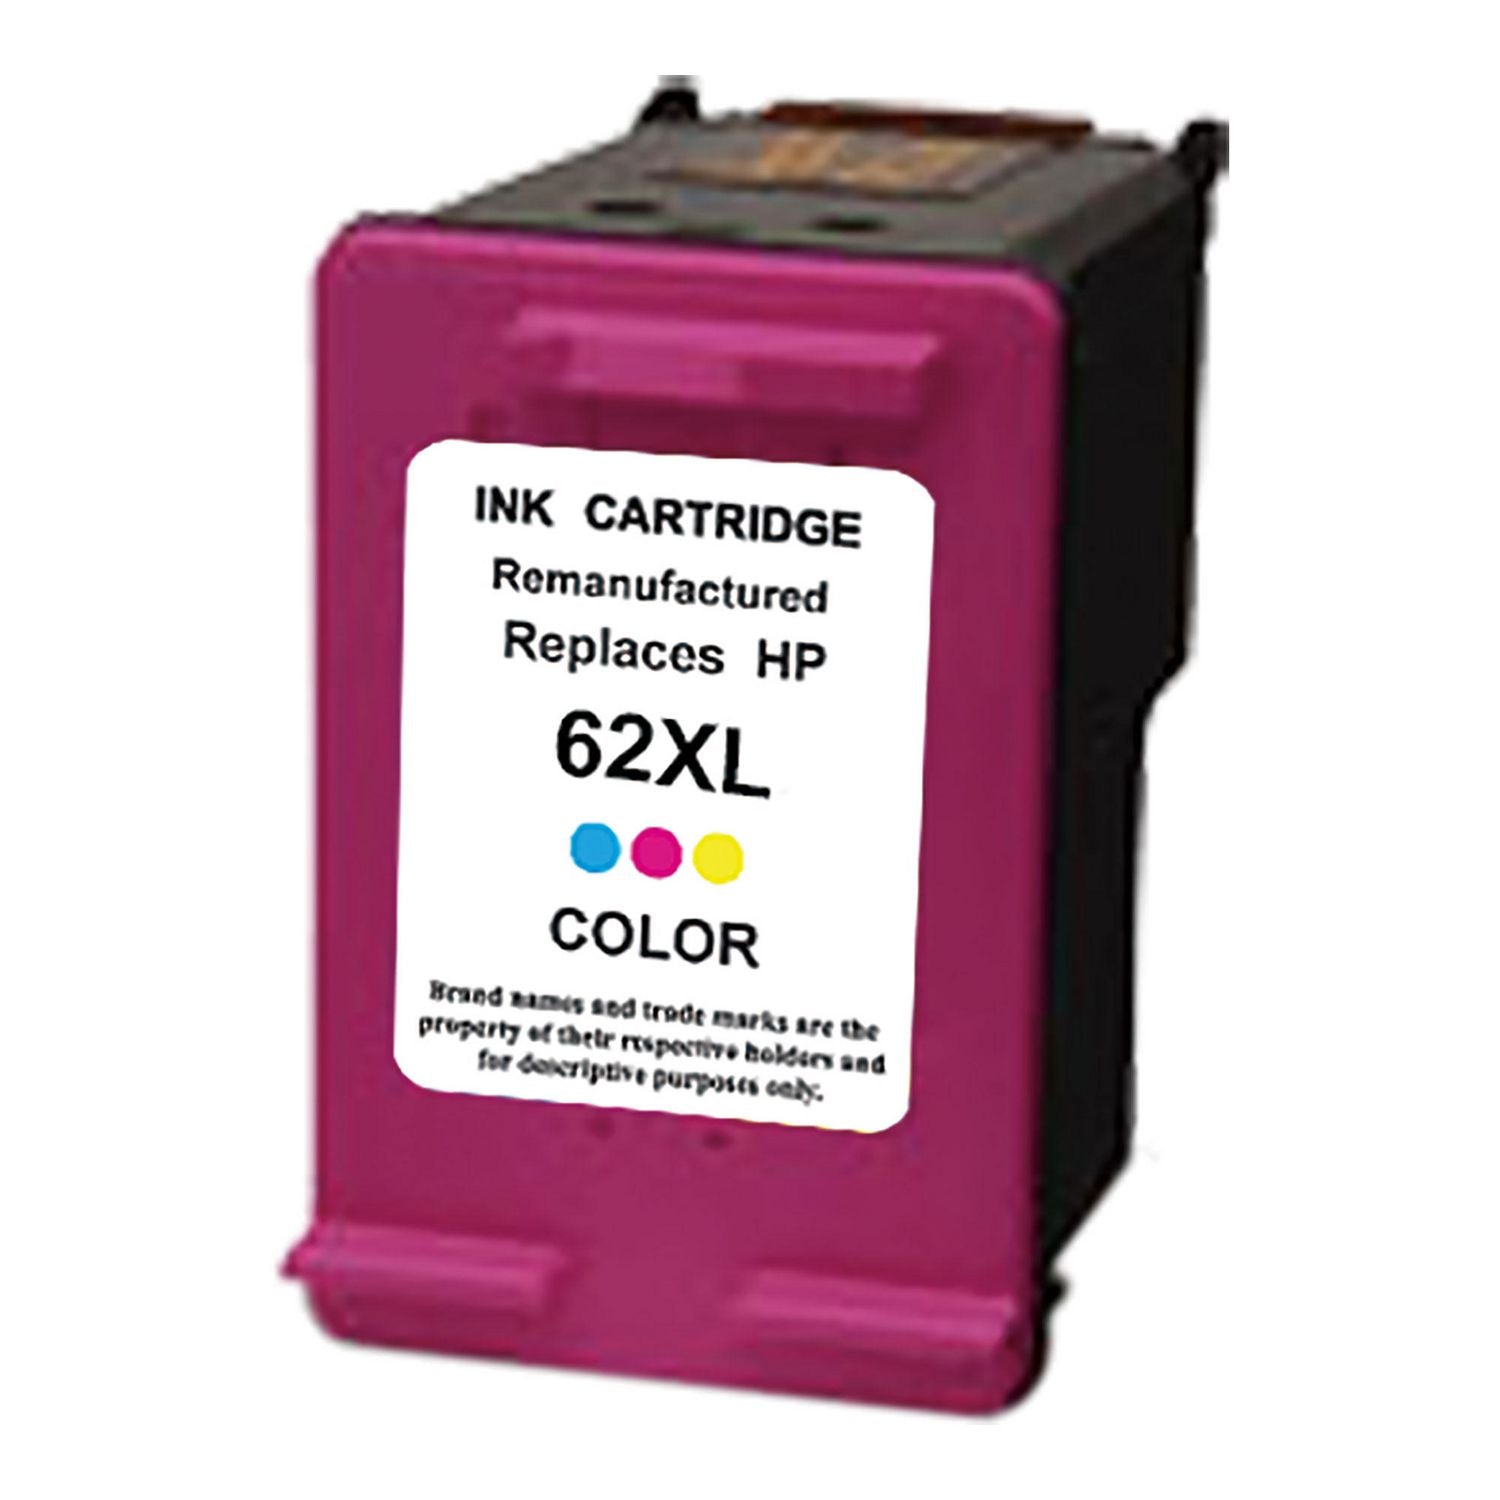 Compatible HP 62XL color ink cartridge